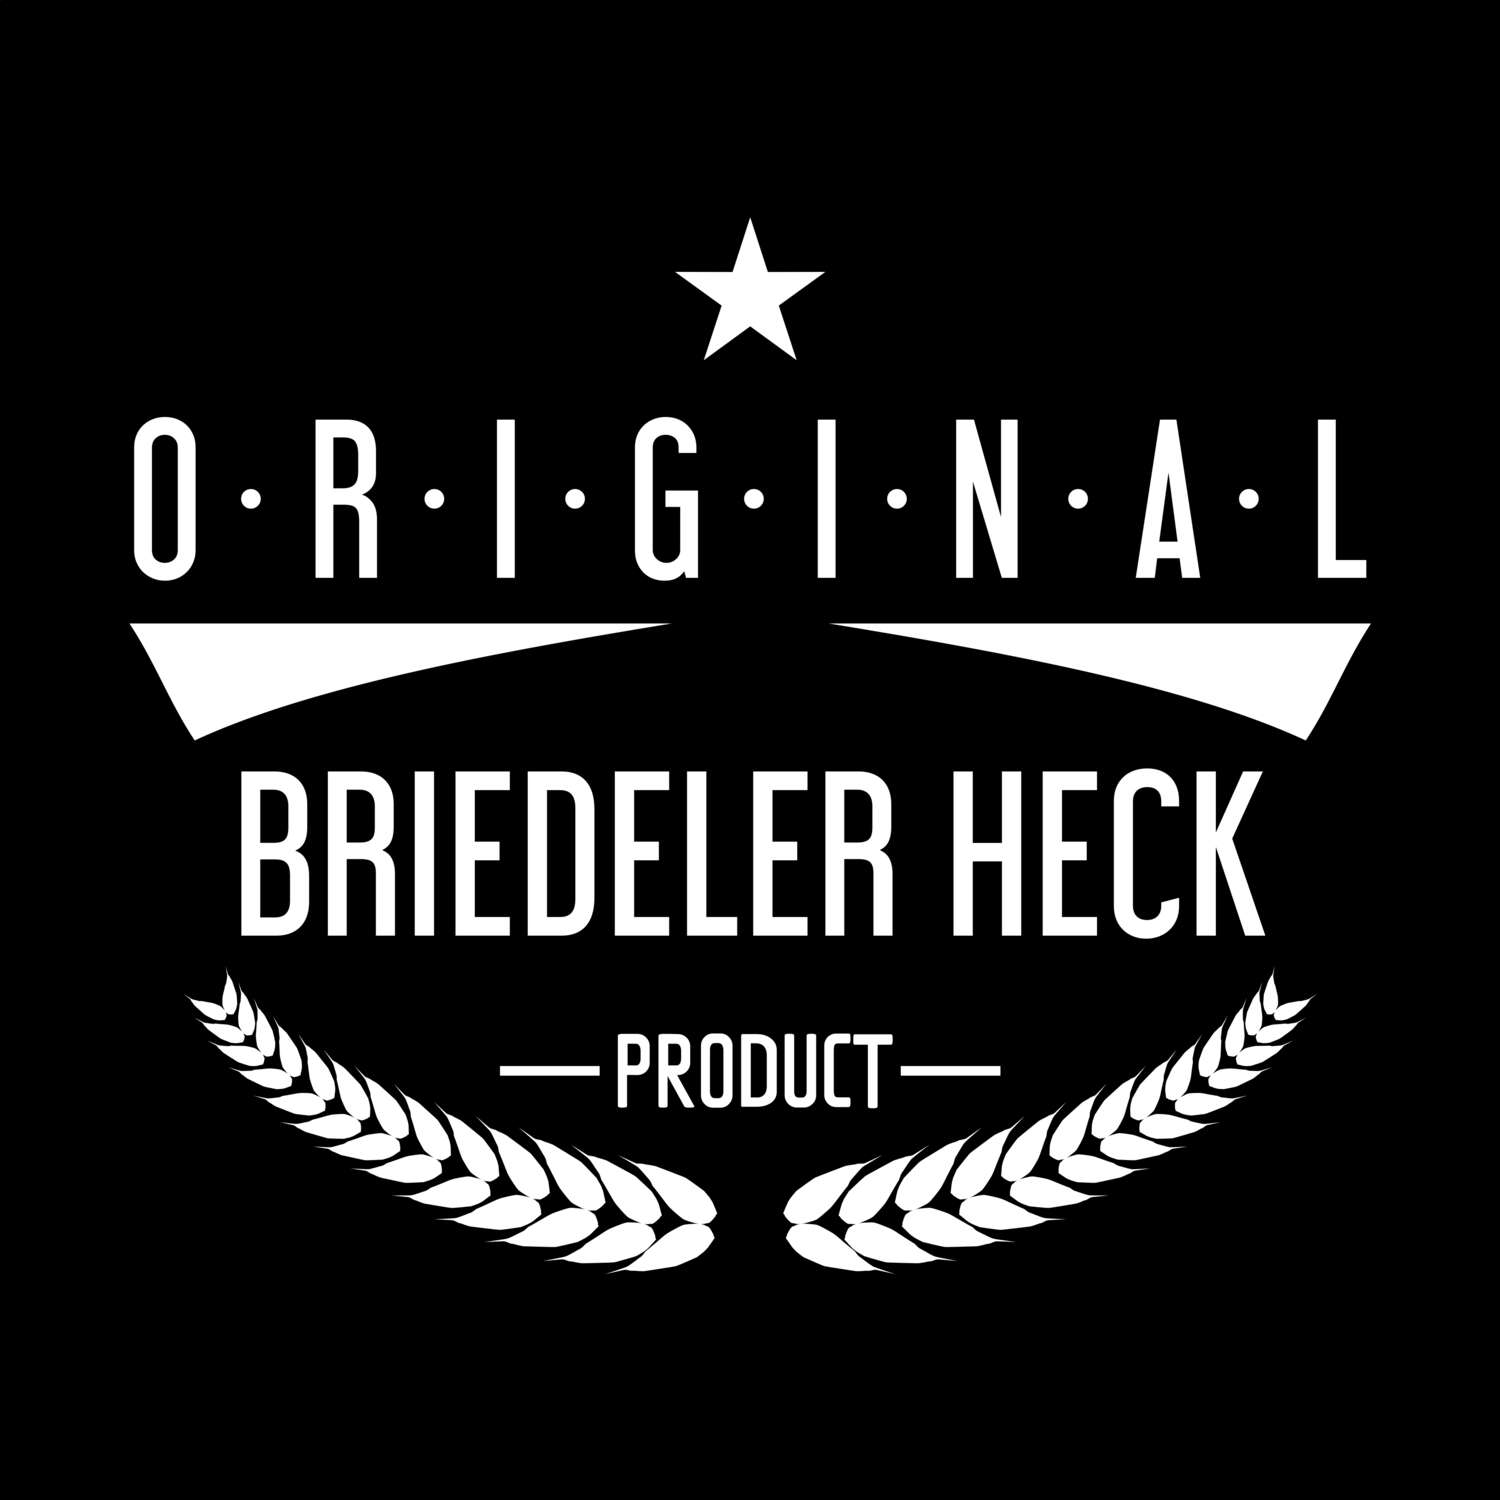 Briedeler Heck T-Shirt »Original Product«